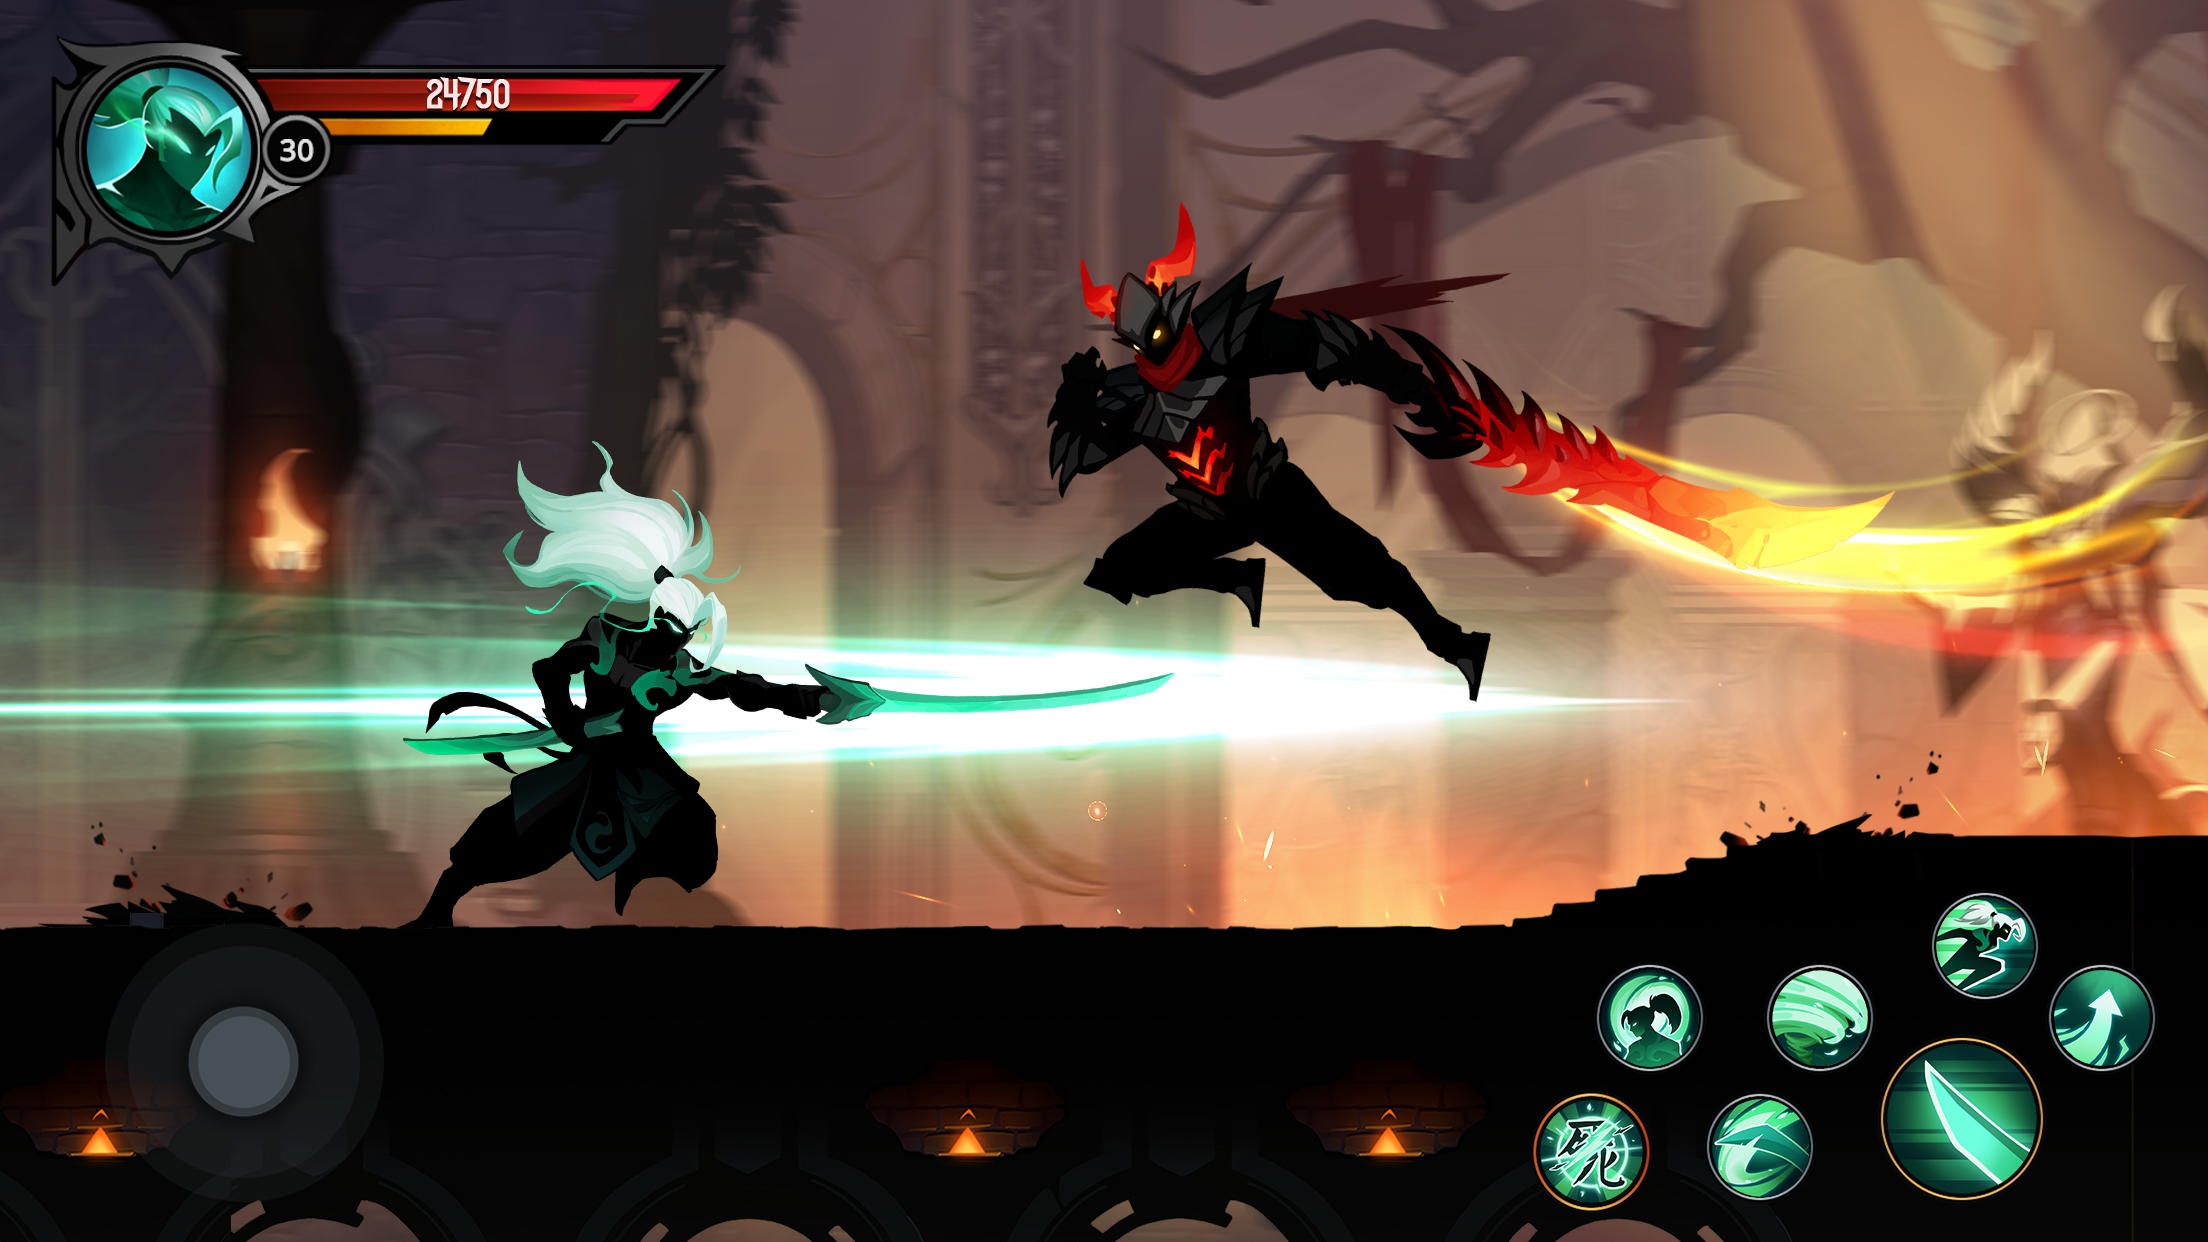 Screenshot 1 of Shadow Knight: Juegos De Ninja 3.24.229